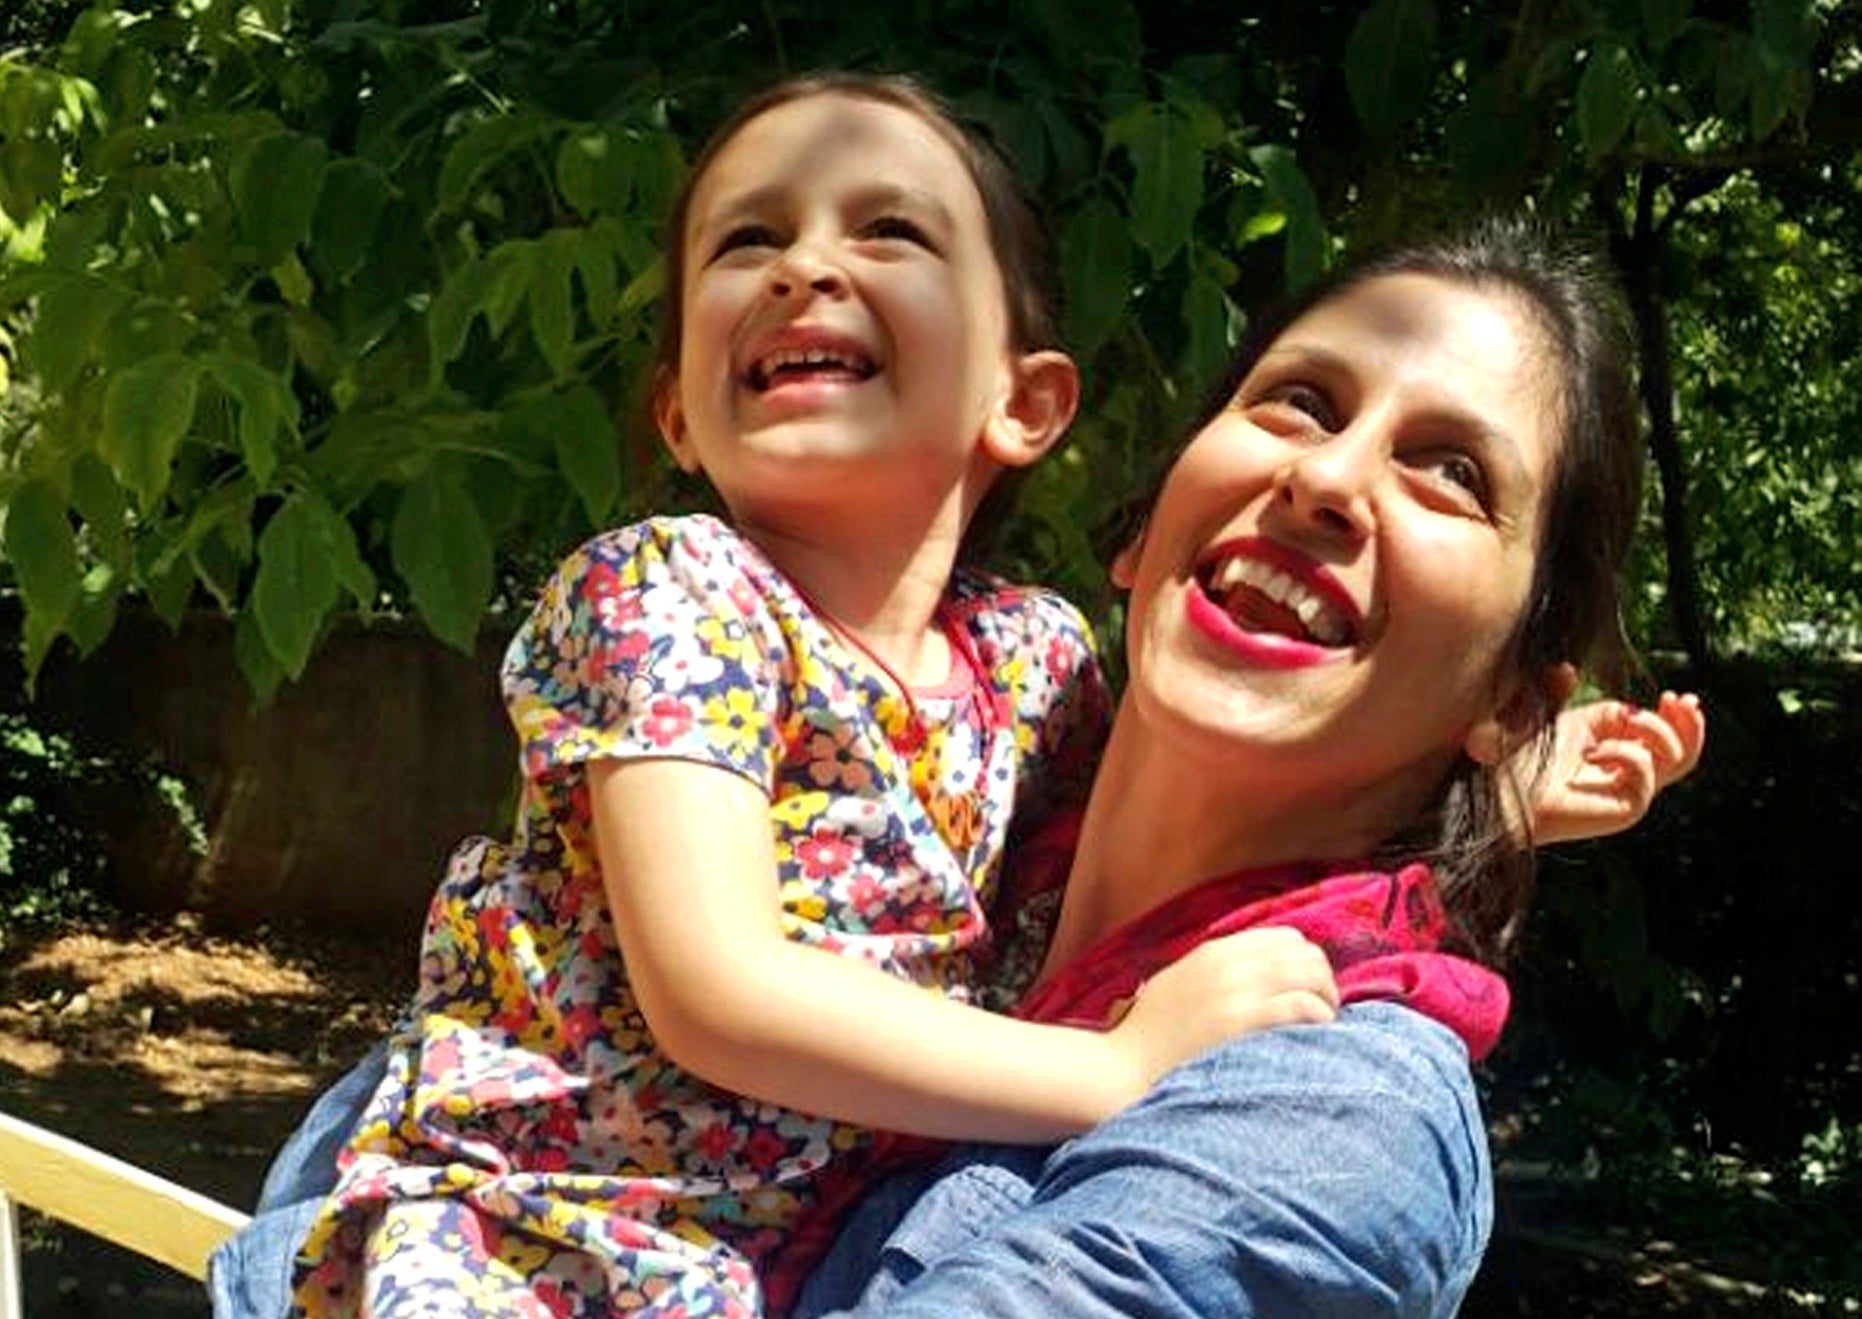 Nazanin Zaghari-Ratcliffe was briefly reunited with her daughter Gabriella a week ago